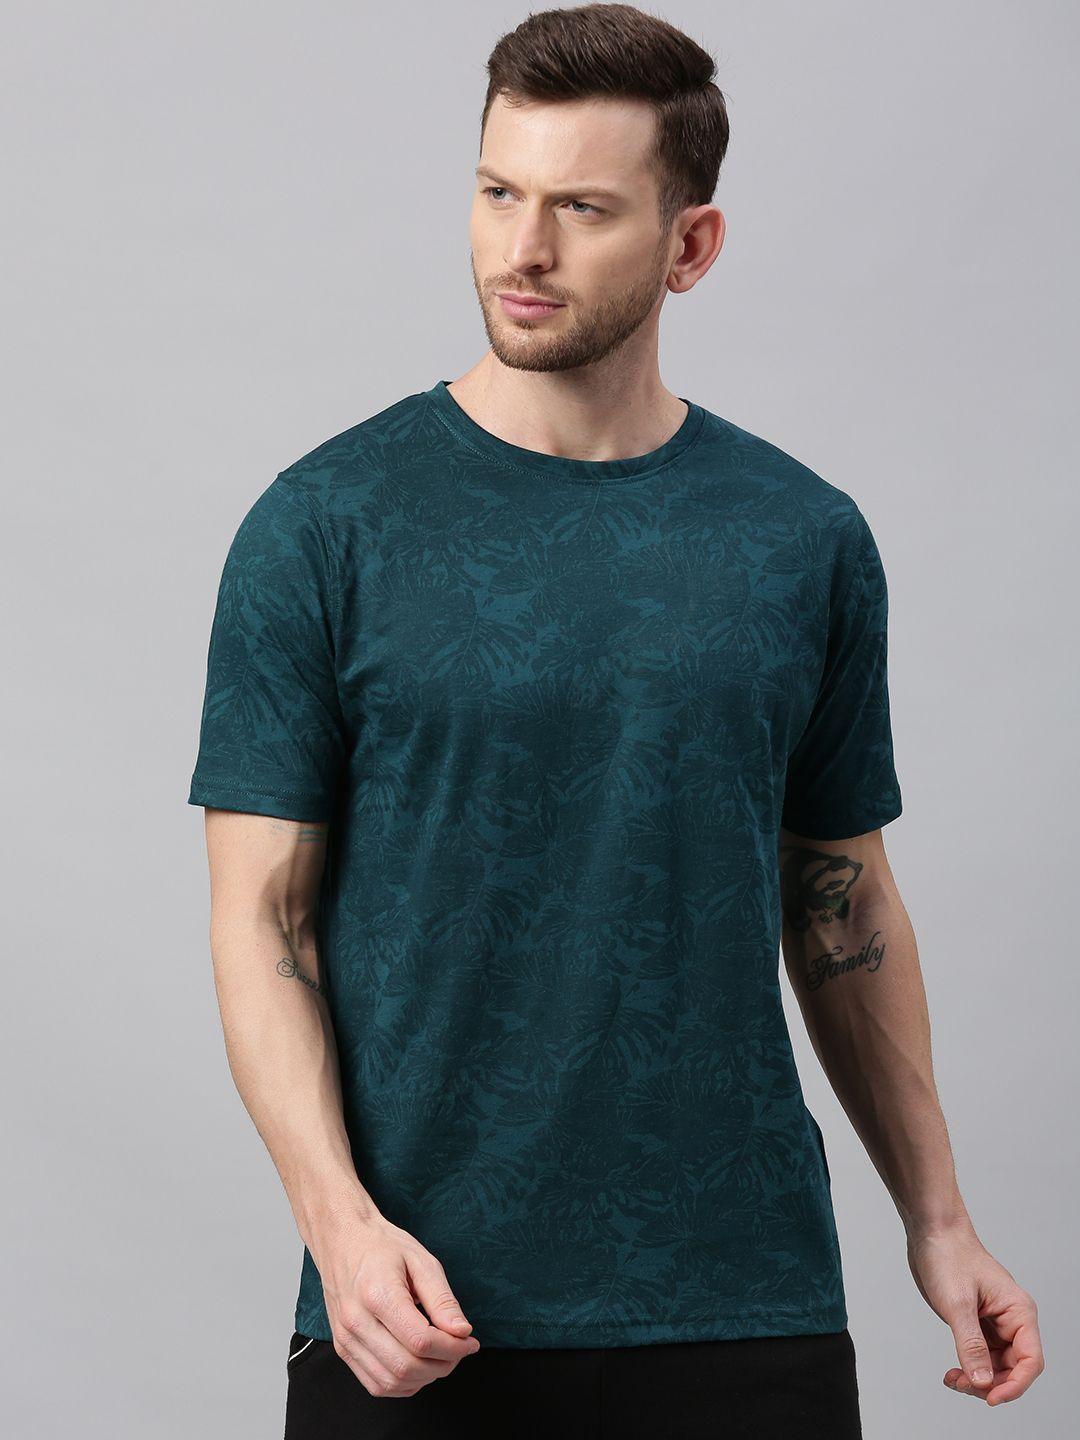 urbano fashion men teal blue tropical printed round neck t-shirt